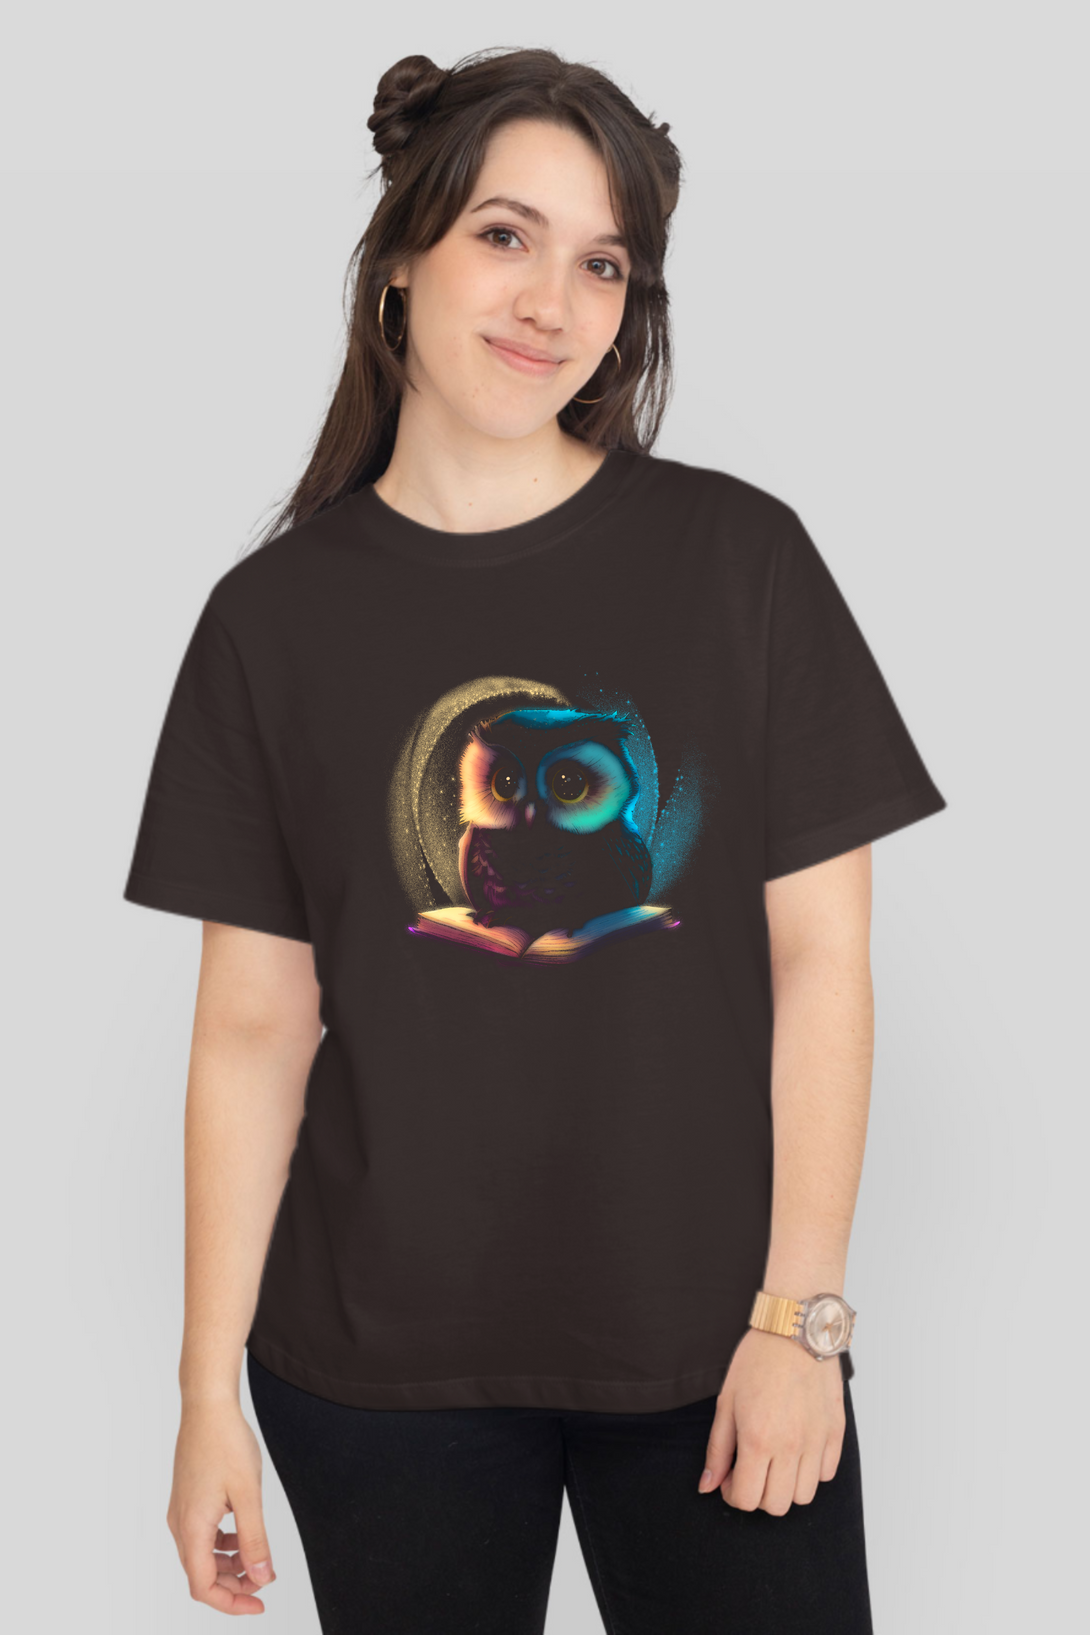 Cute Owl Printed T-Shirt For Women - WowWaves - 9